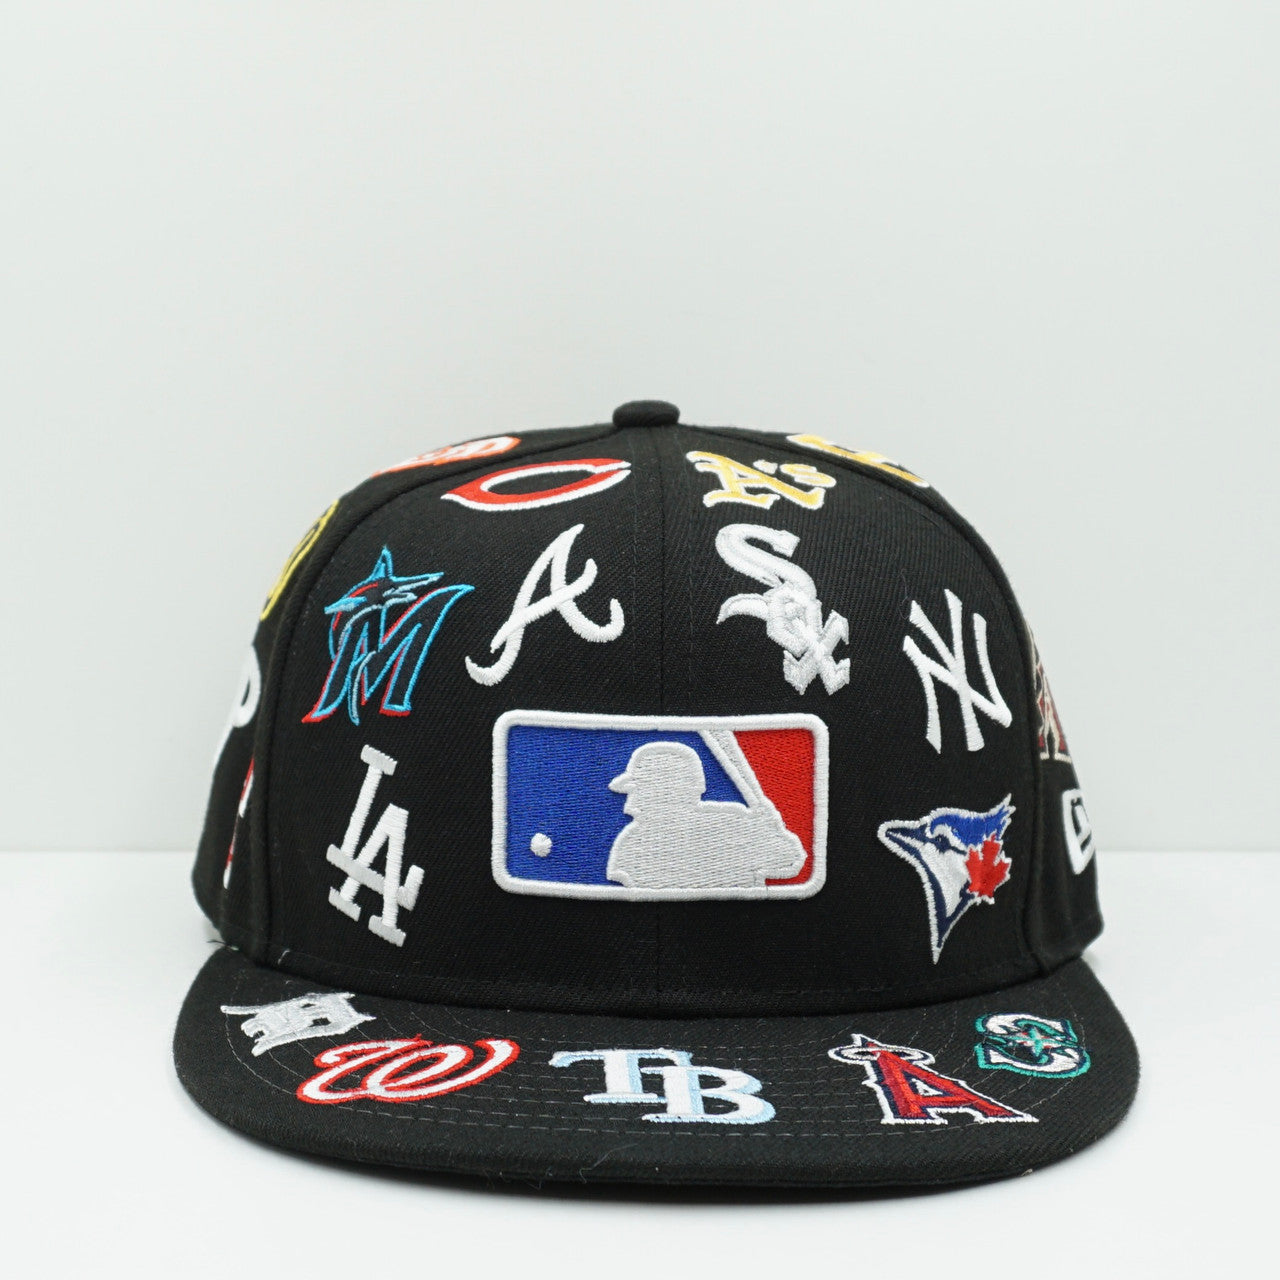 New Era MLB Team Logos Fitted Cap